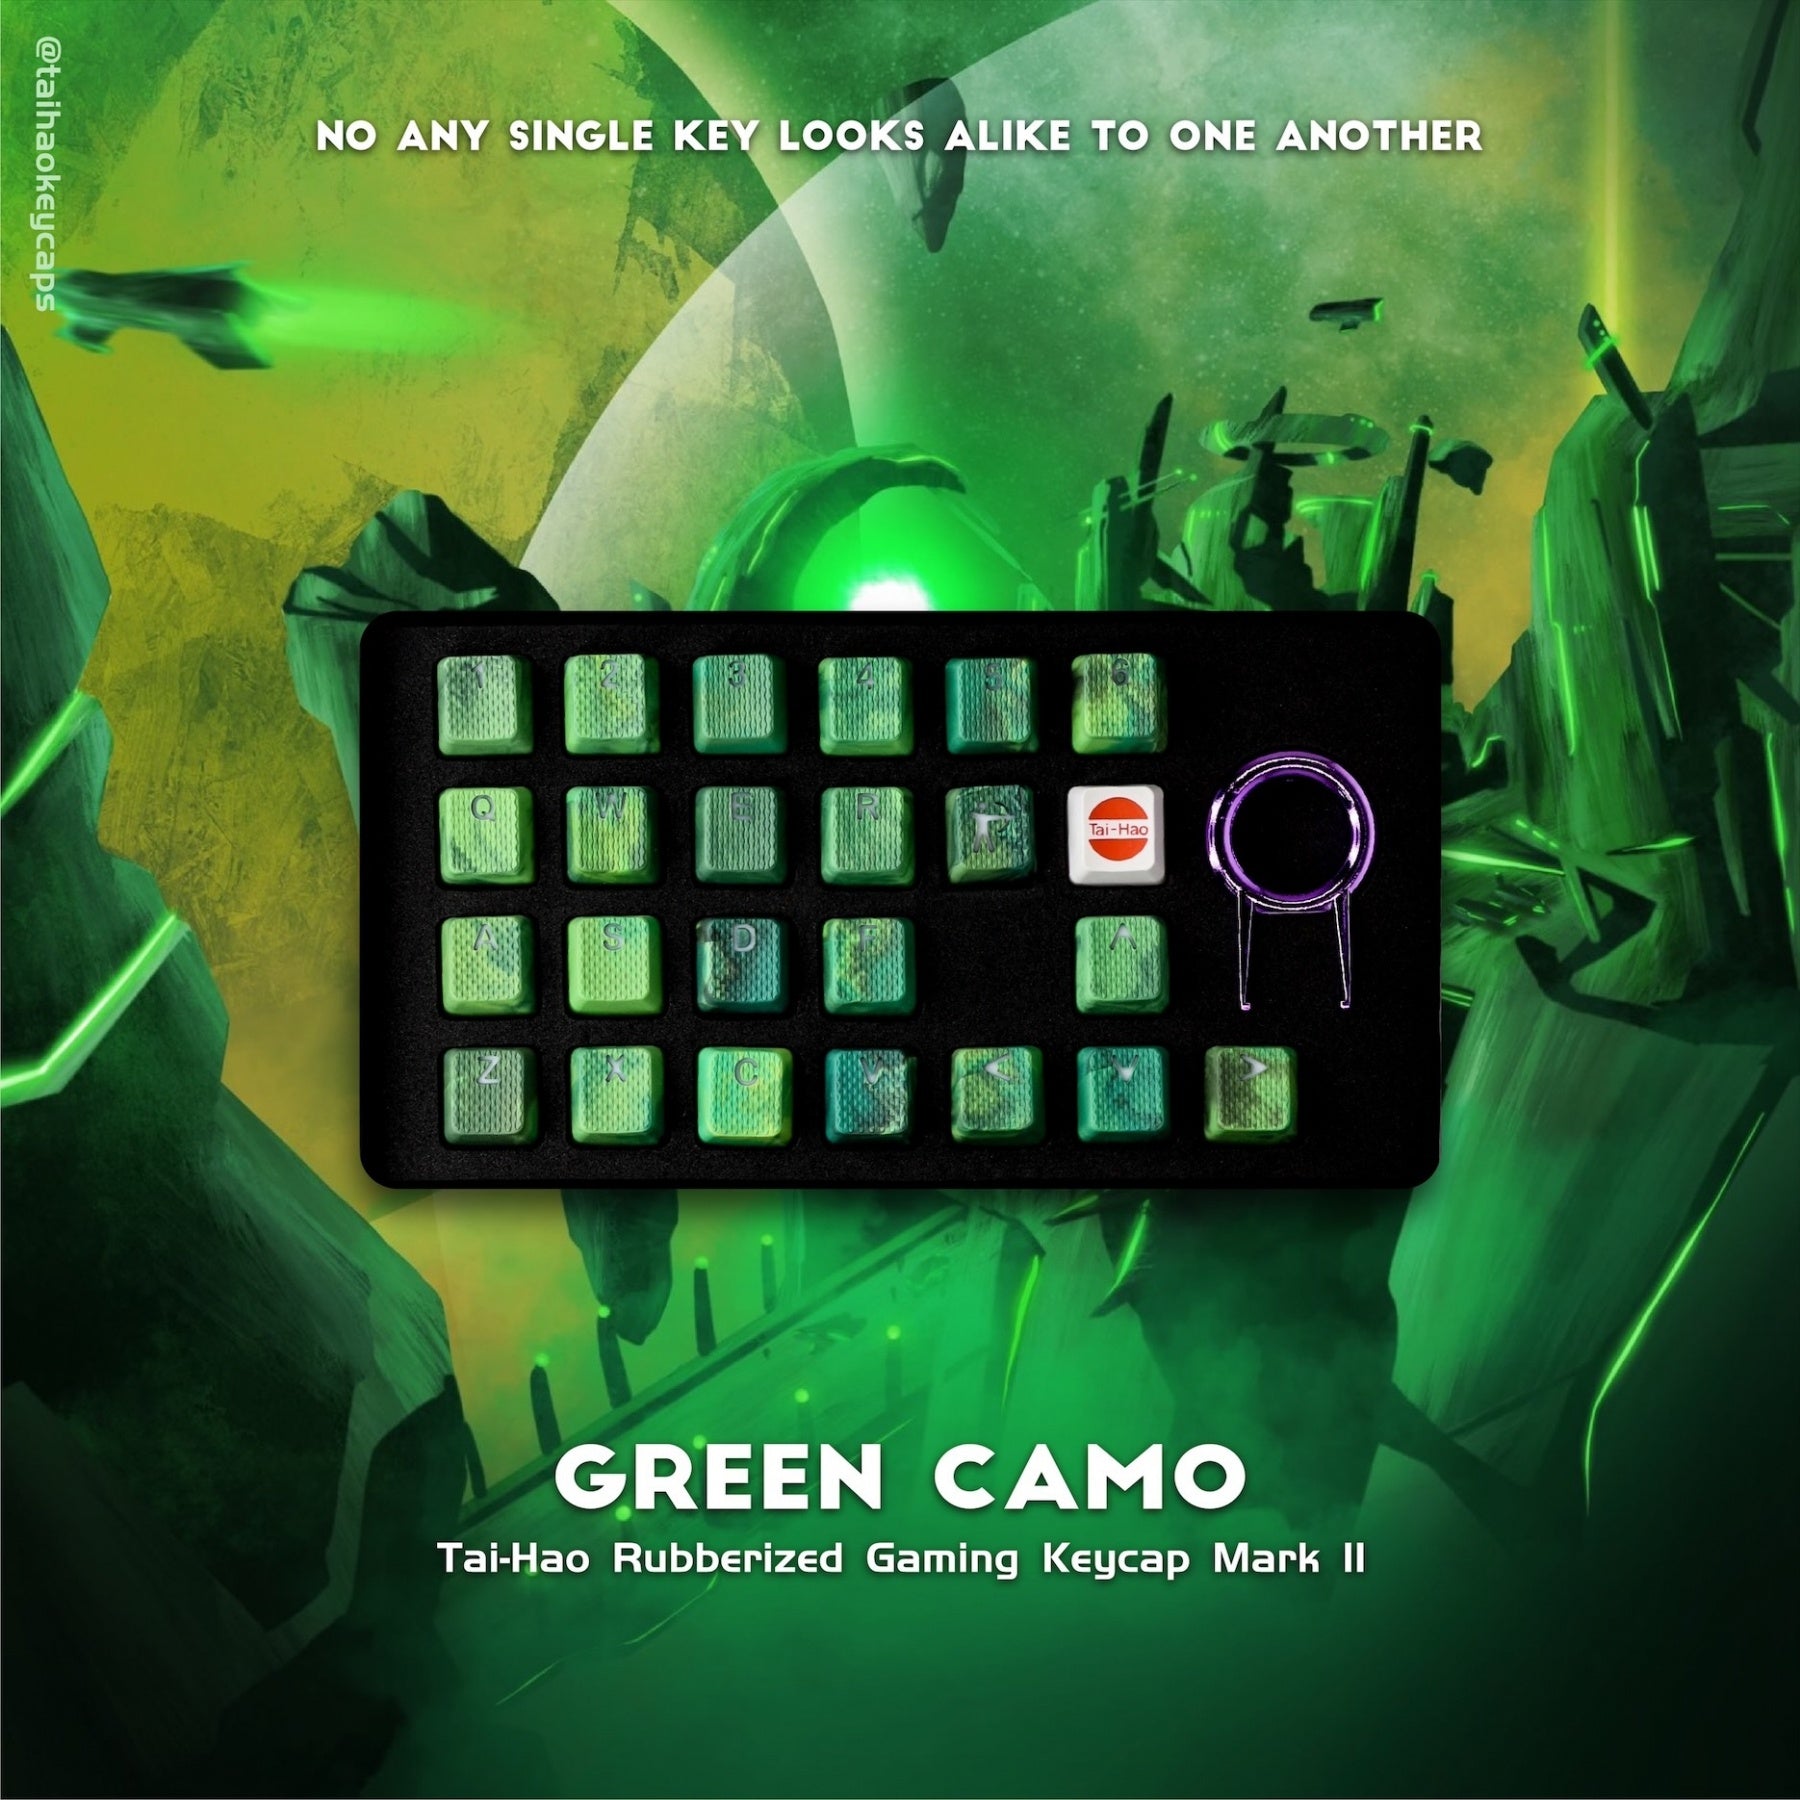 Tai-Hao 23-Key TPR Rubberized Gaming Keycap Set Green Camo Rubber MKOFXXHYW0 |0|